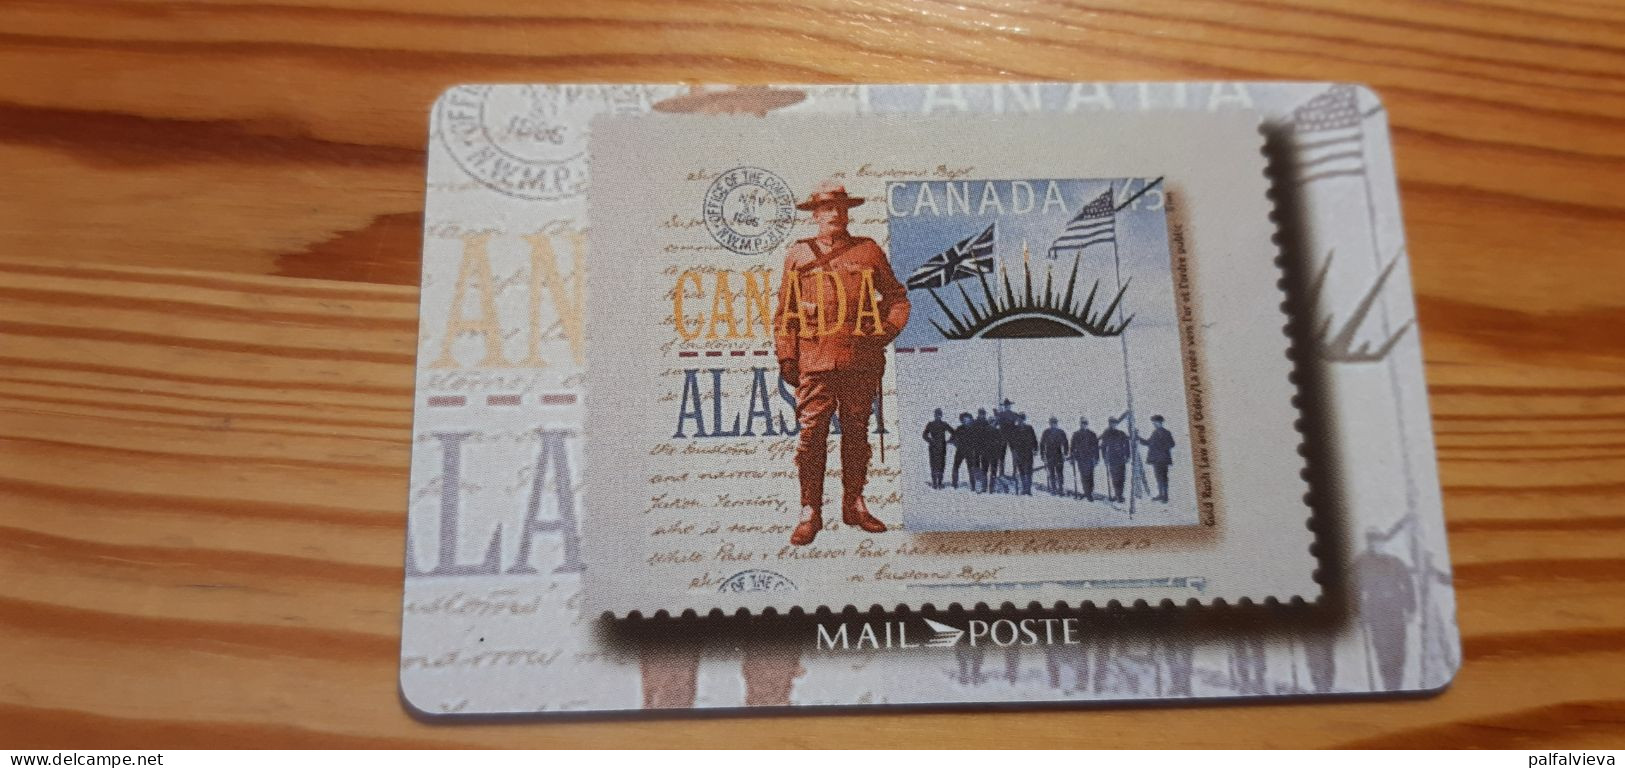 Prepaid Phonecard Canada, Mail Poste - Stamp - Canada